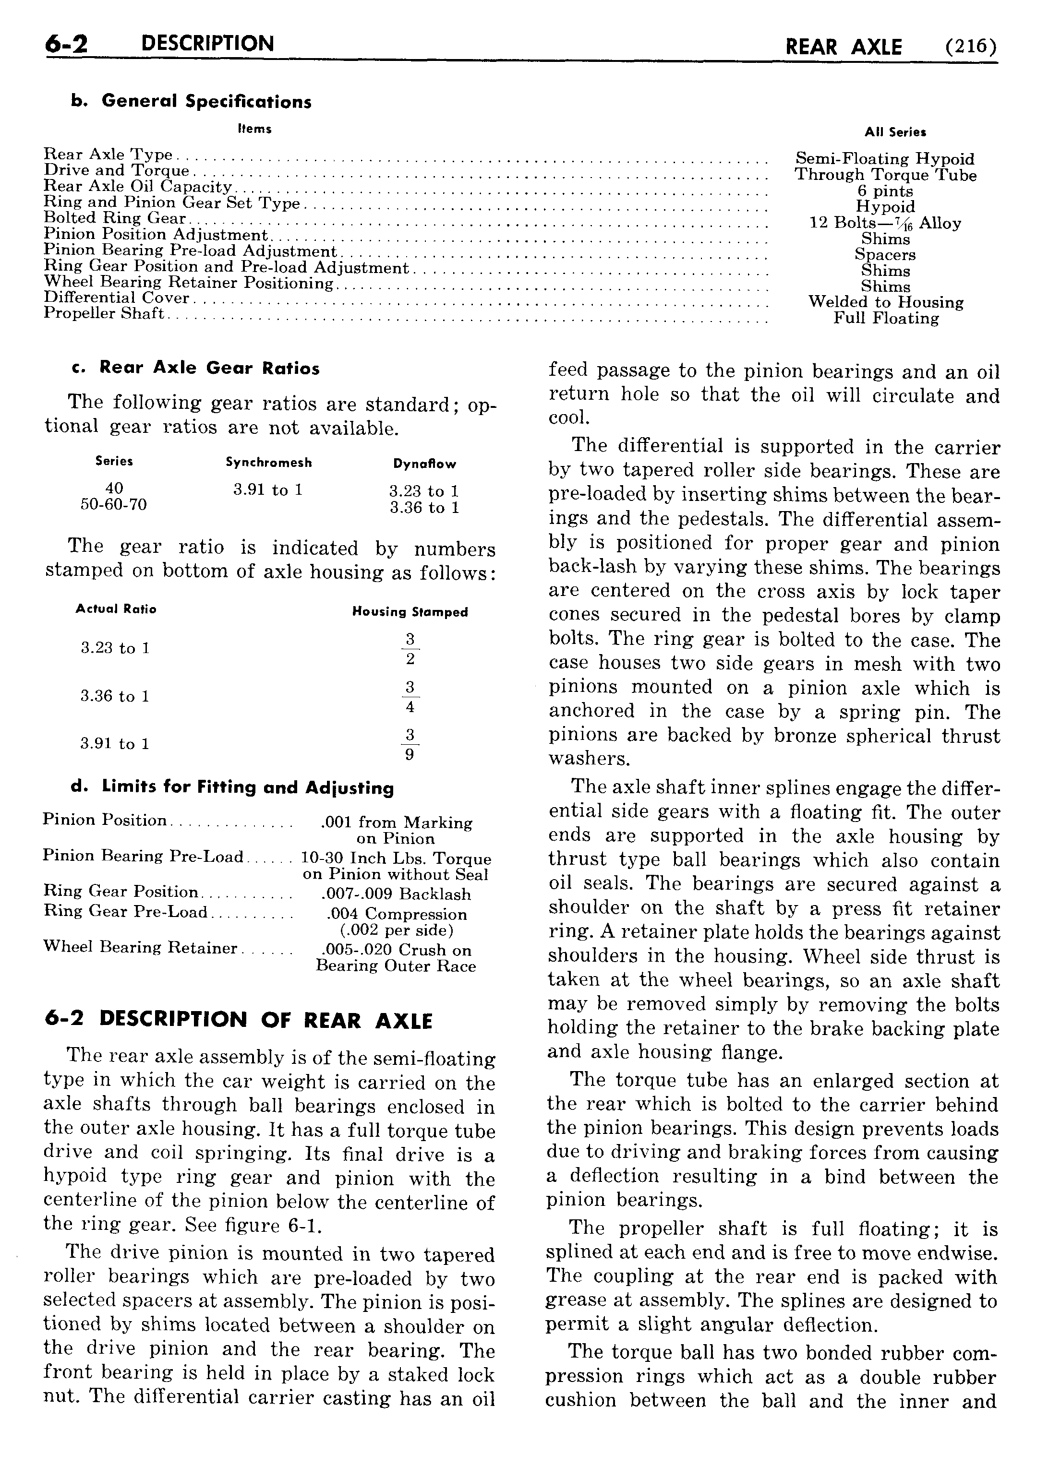 n_07 1956 Buick Shop Manual - Rear Axle-002-002.jpg